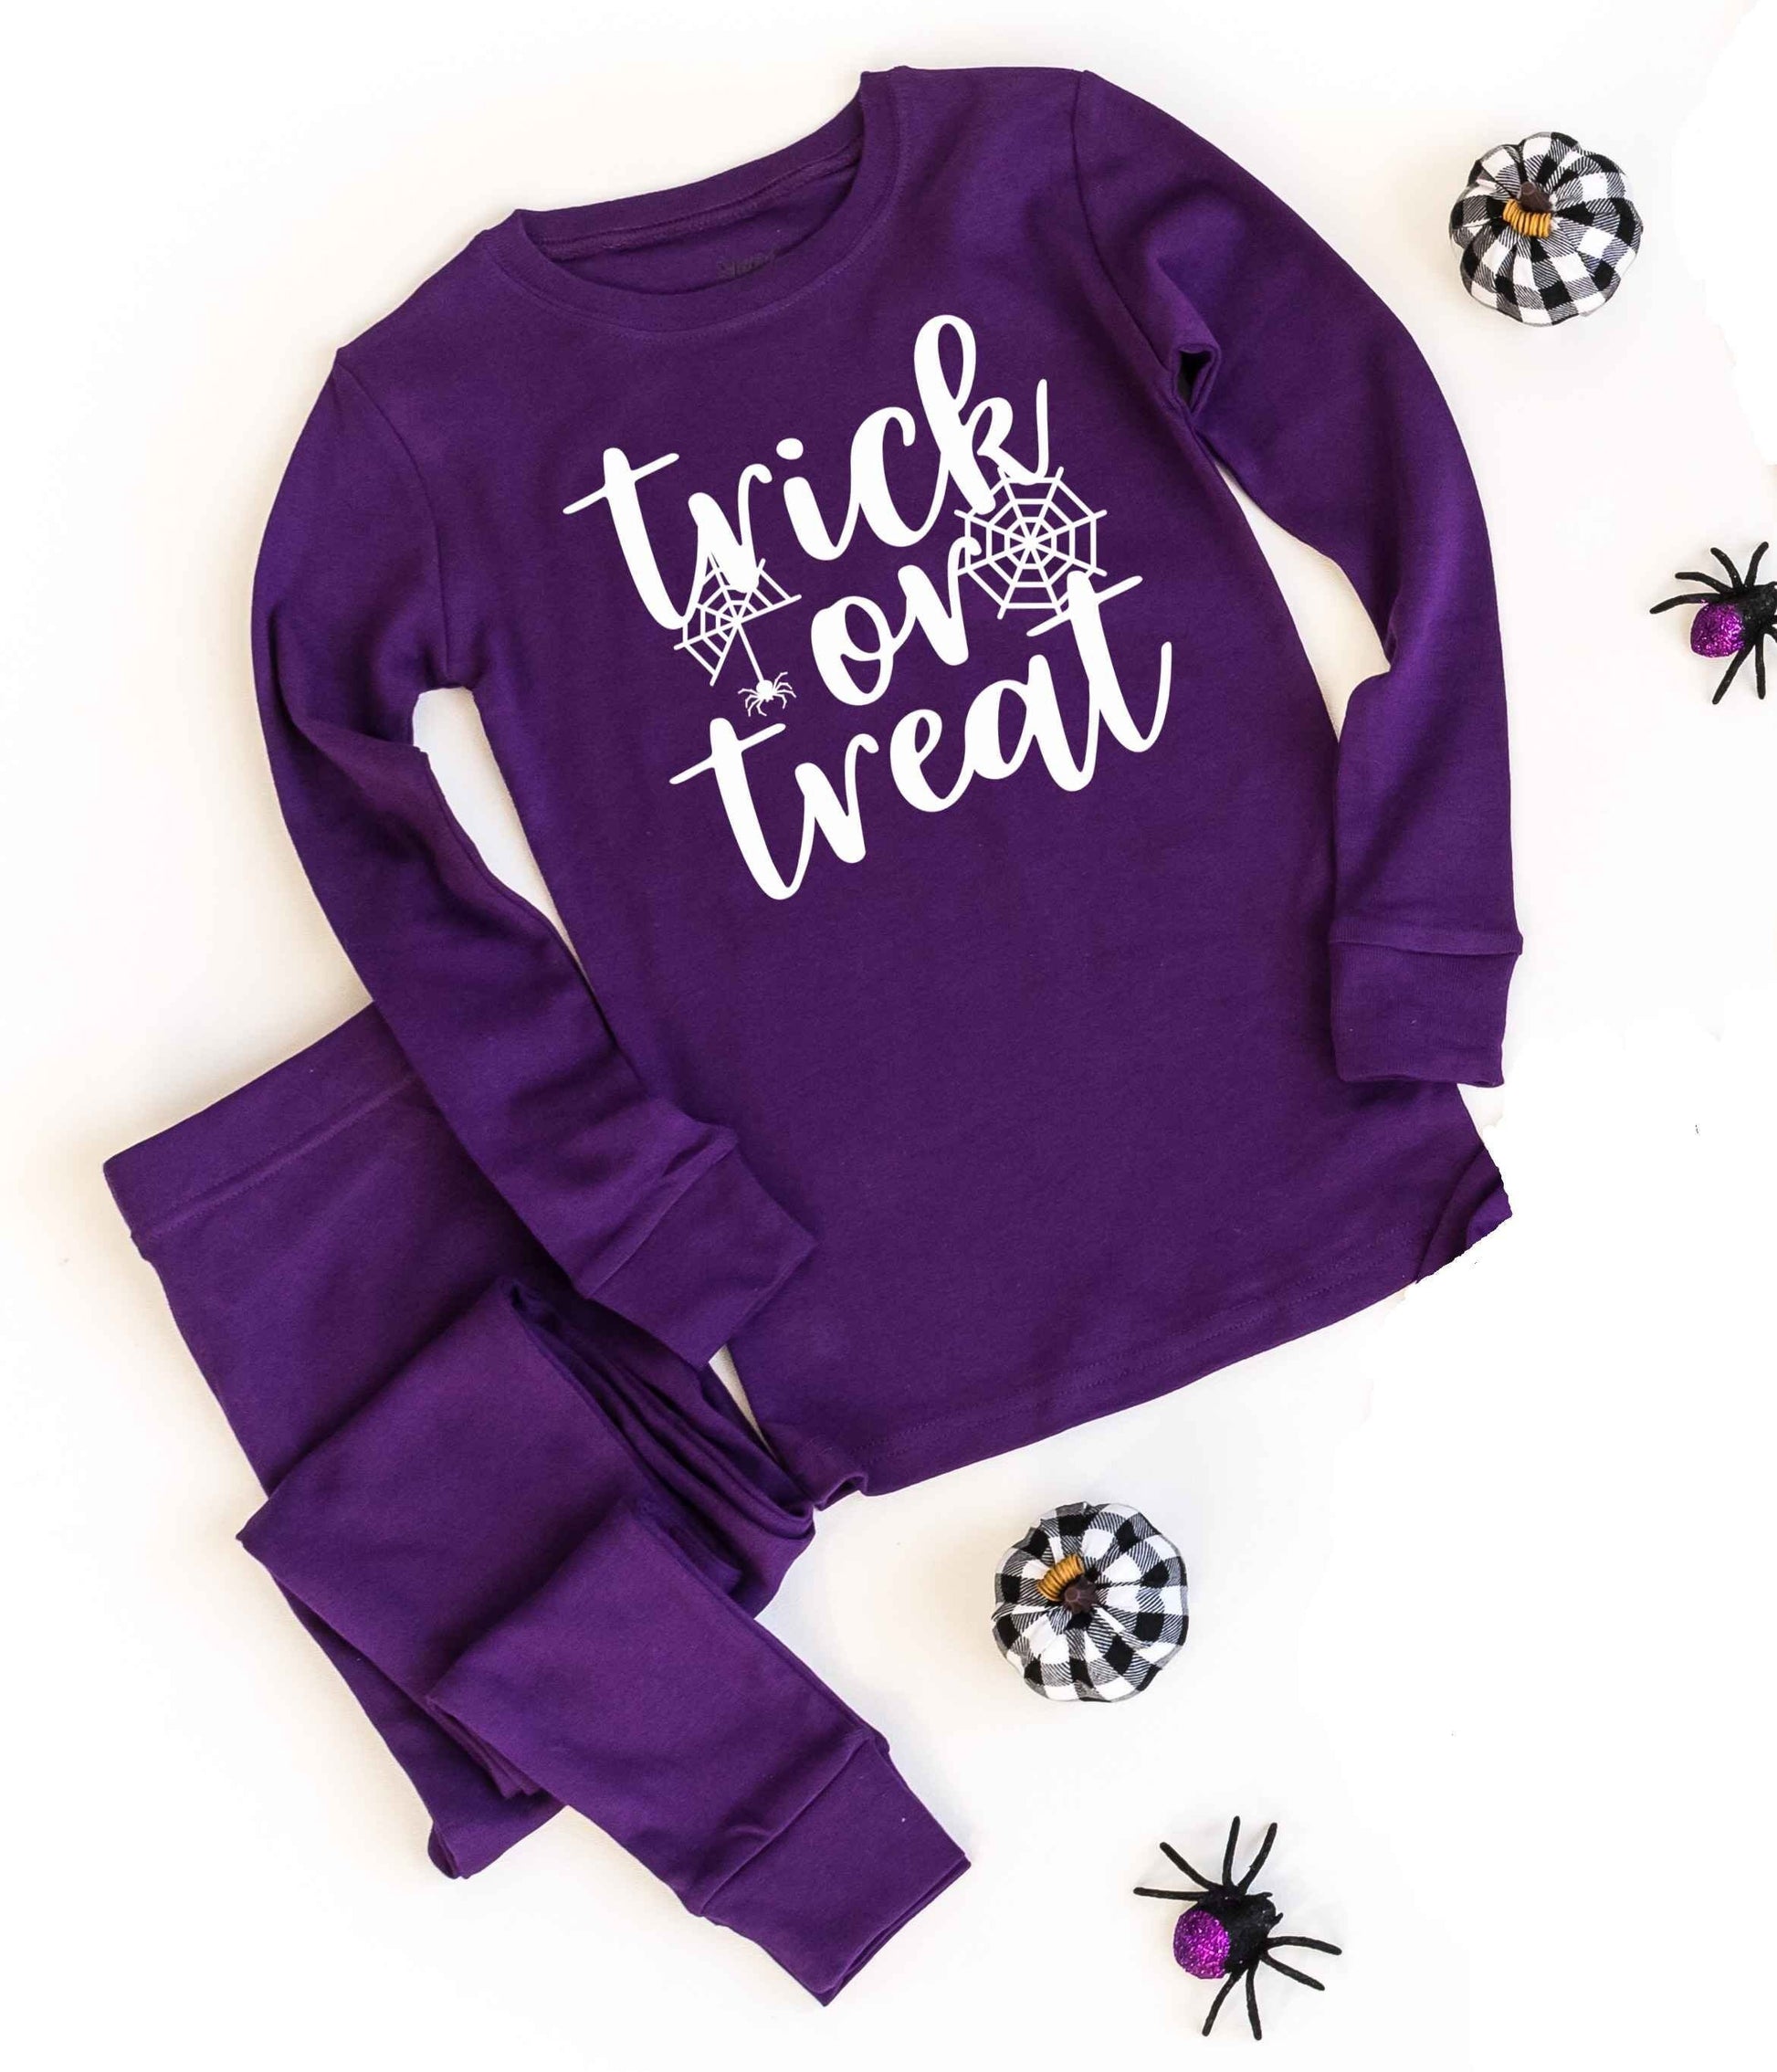 Trick or Treat v4 Solid Purple Pajamas - Halloween Pajama Sets - Kids and Adult Sizes